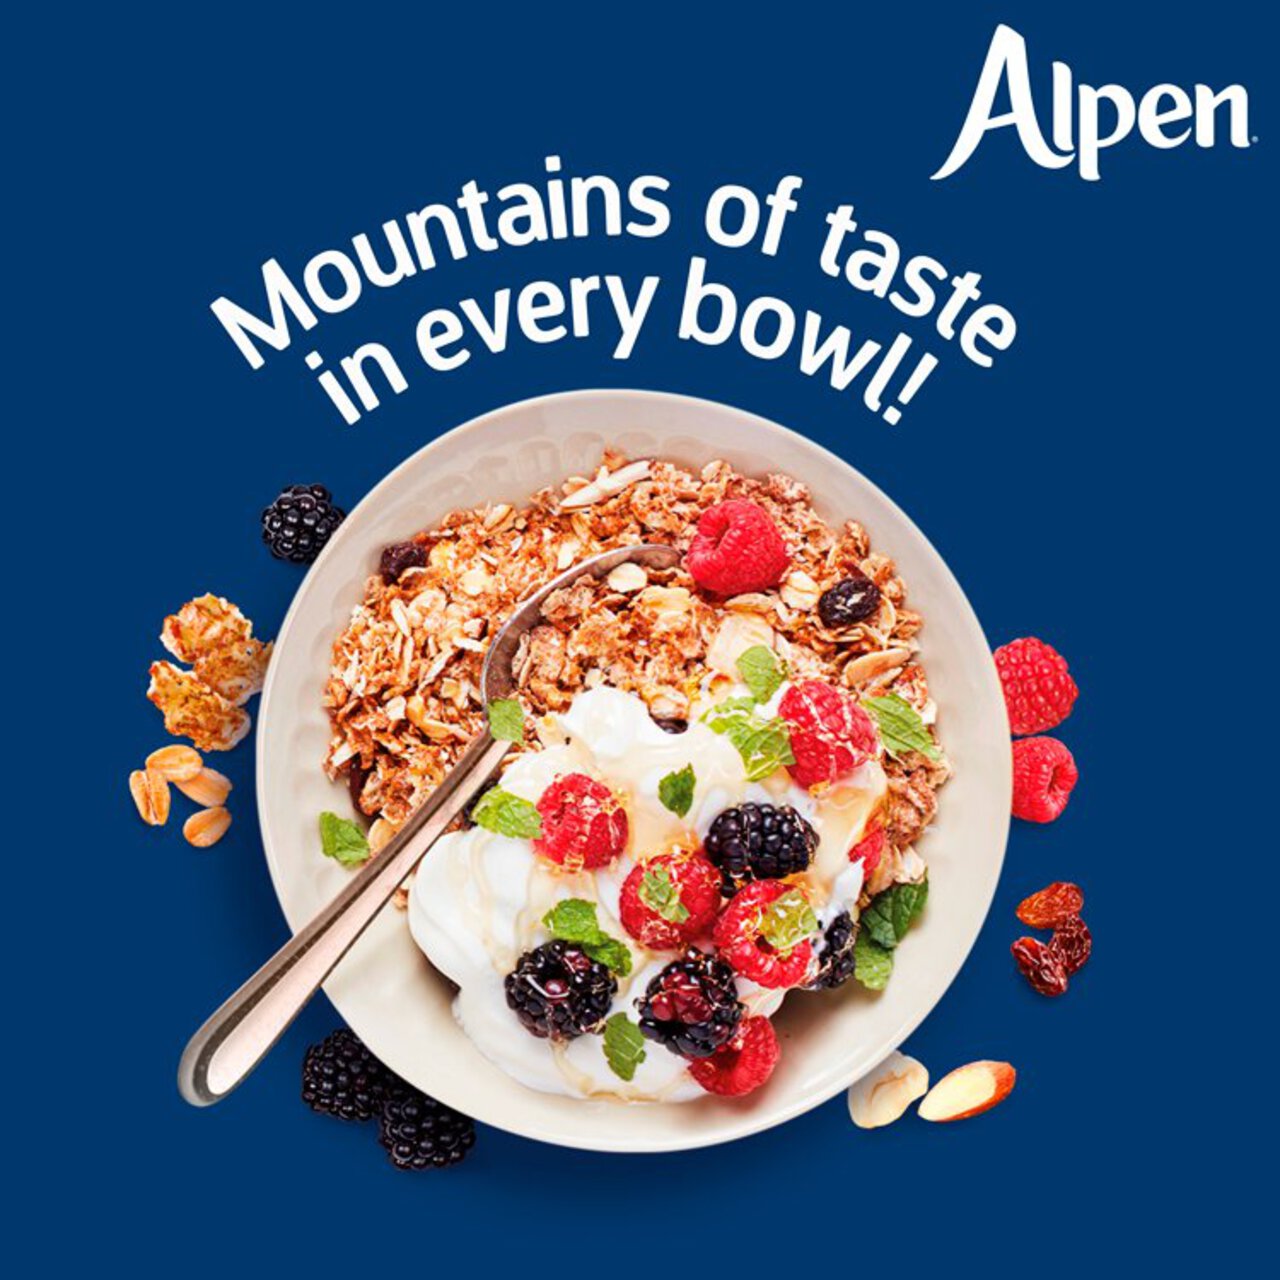 Alpen Muesli No Added Sugar 1.1kg